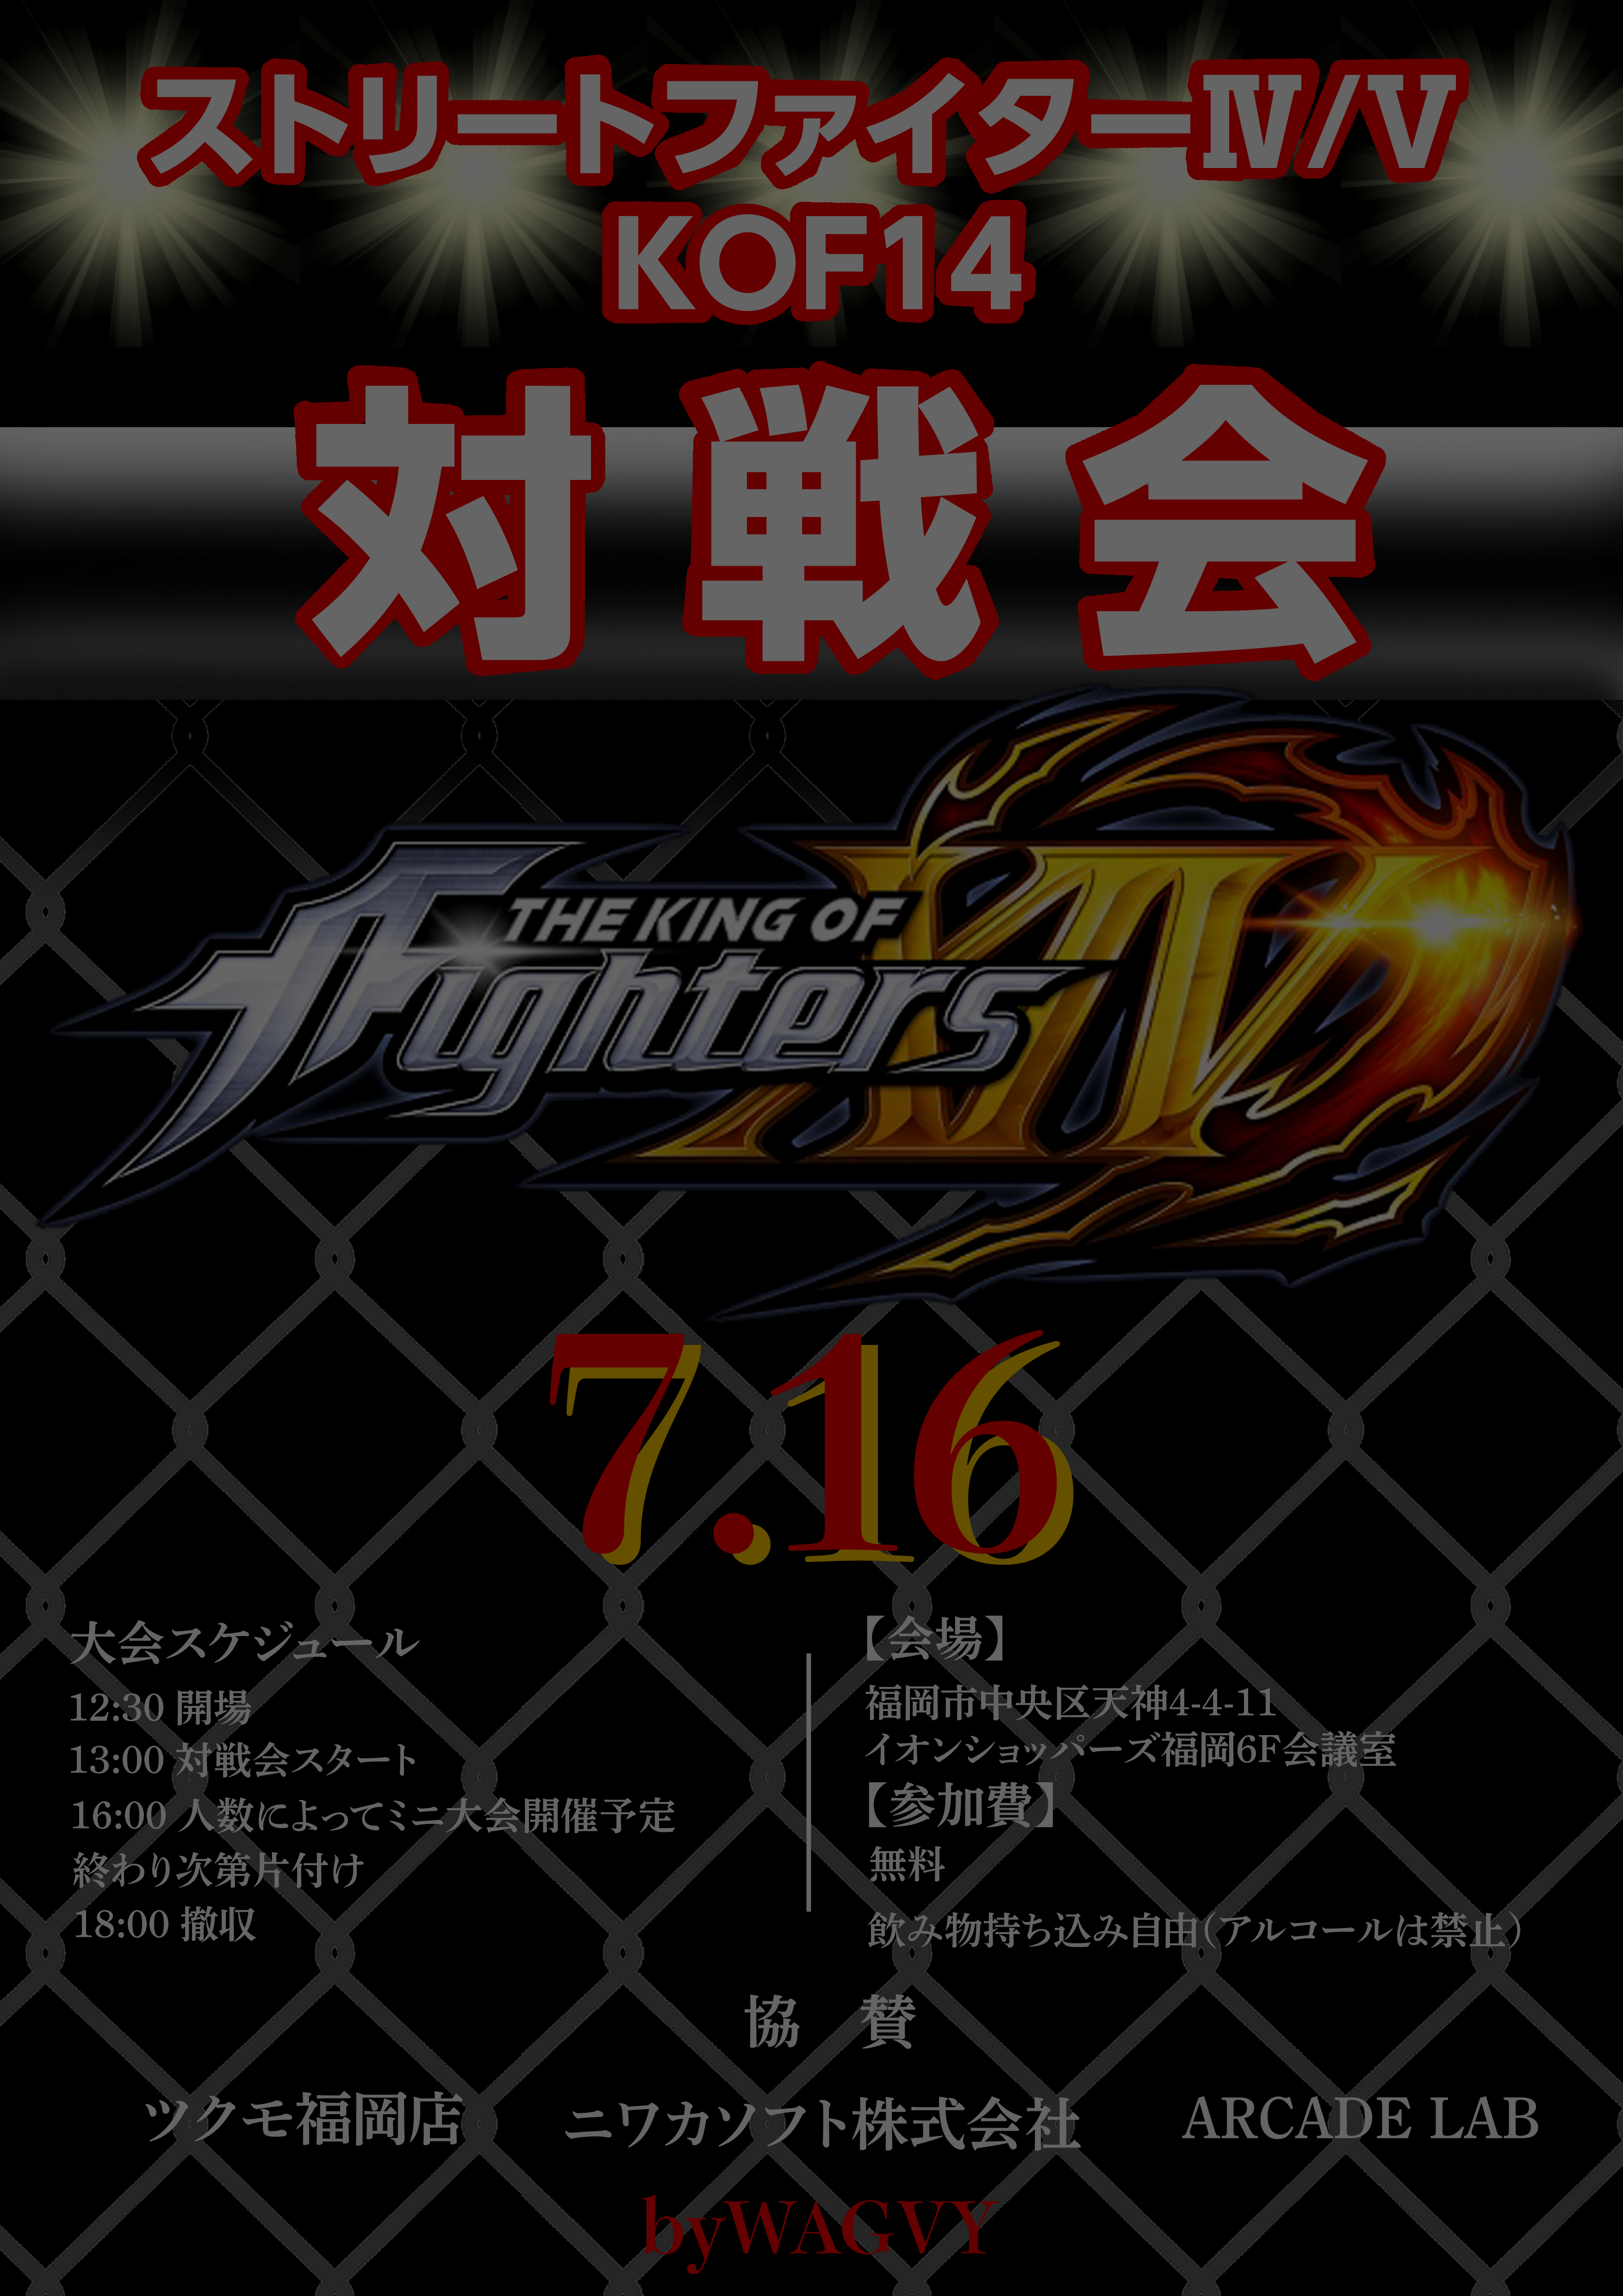 KOF14・STREET FIGHTER4and5 対戦会